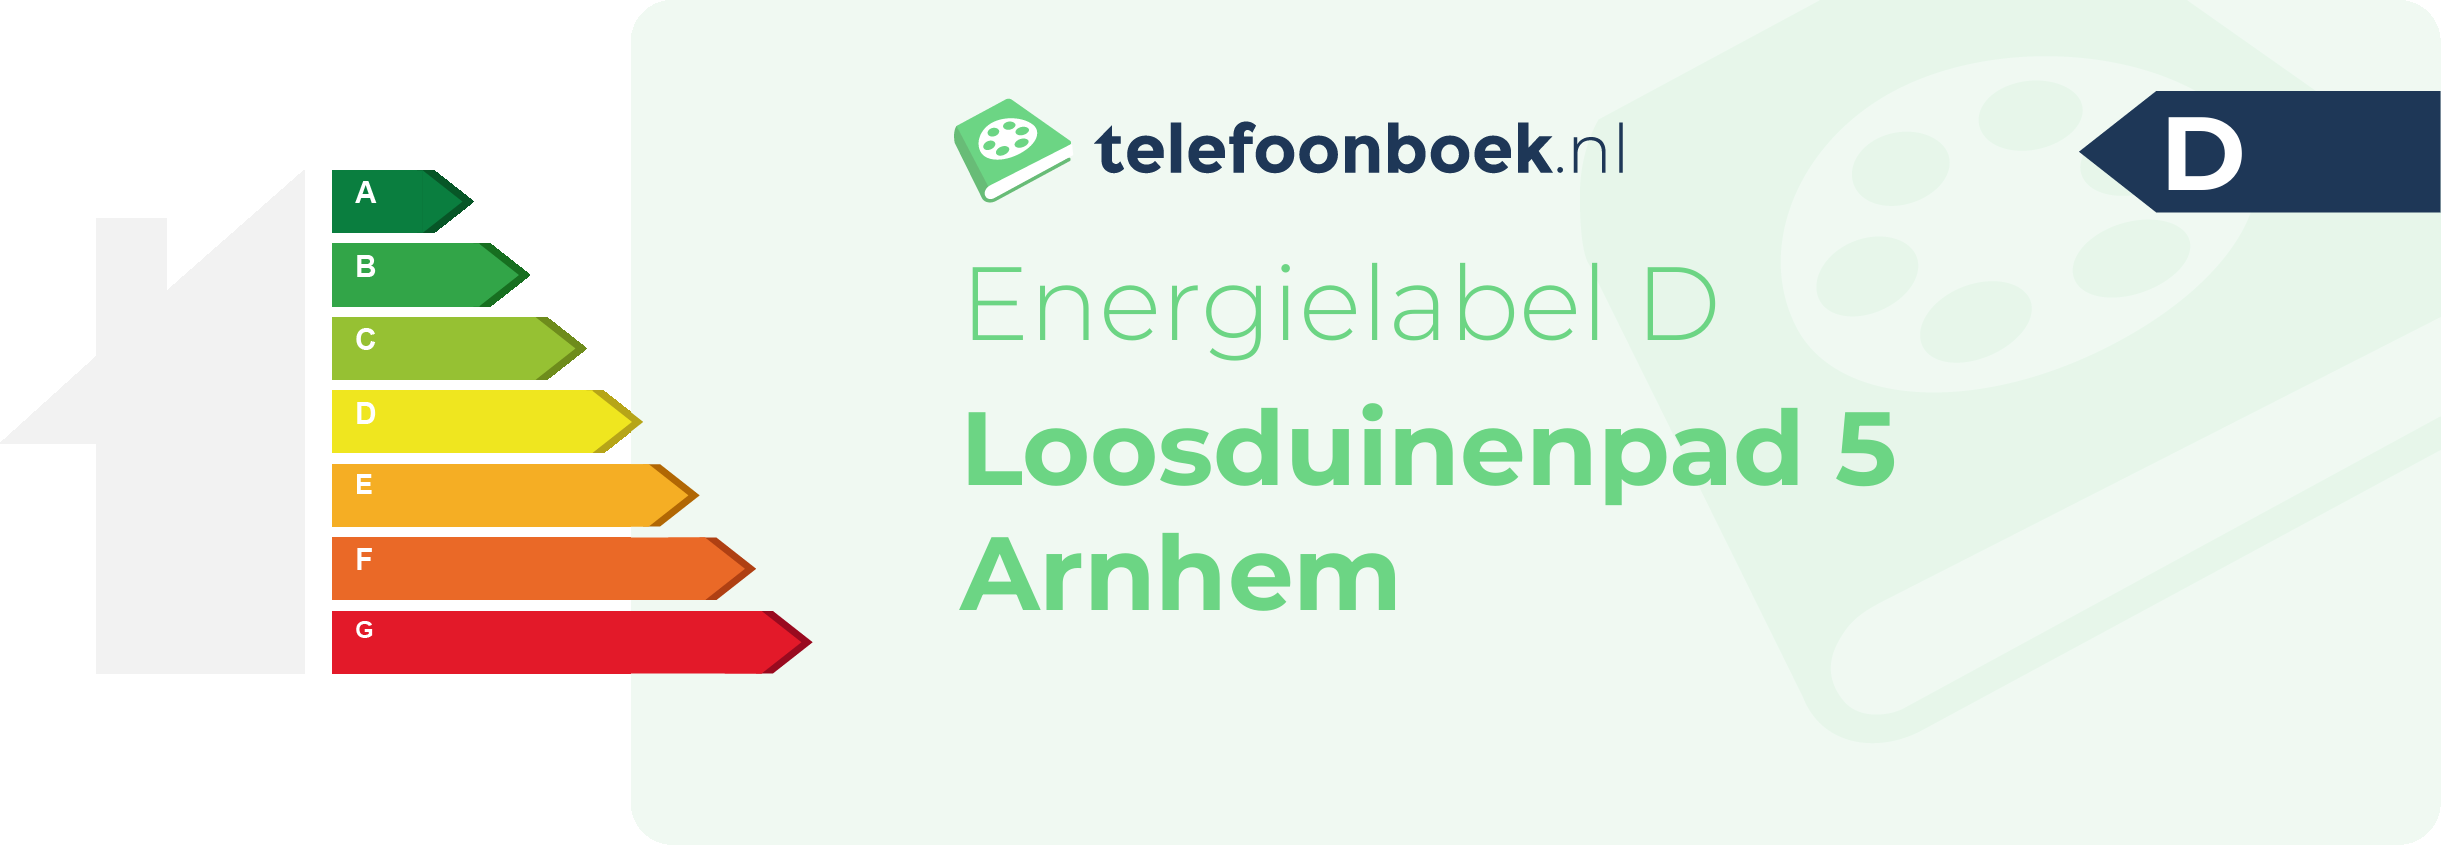 Energielabel Loosduinenpad 5 Arnhem